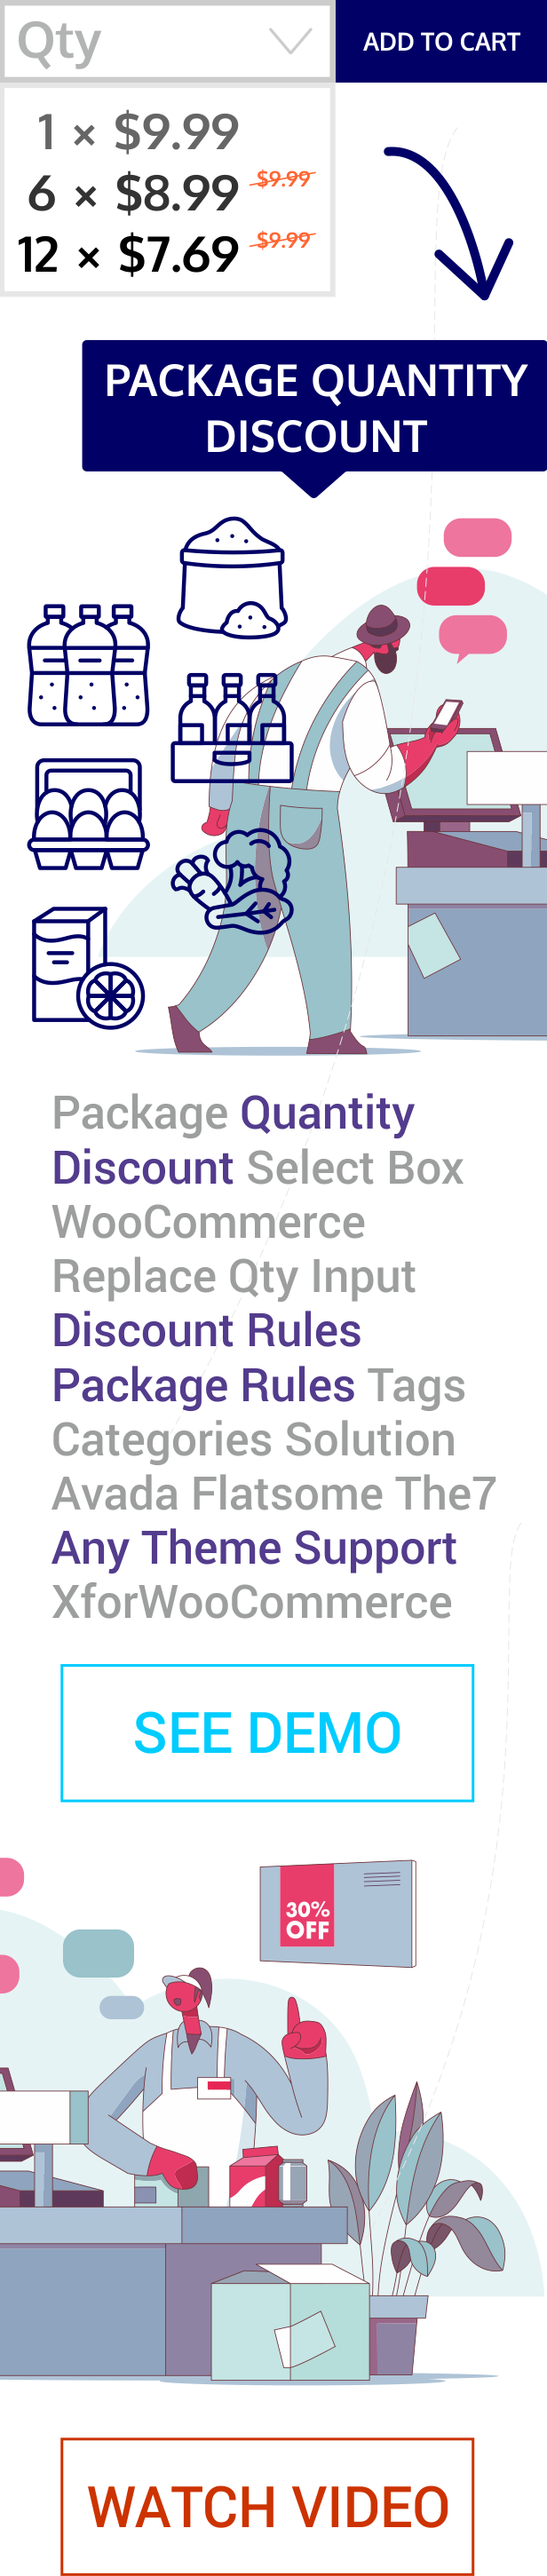 Paket Mengenrabatt für WooCommerce - 3